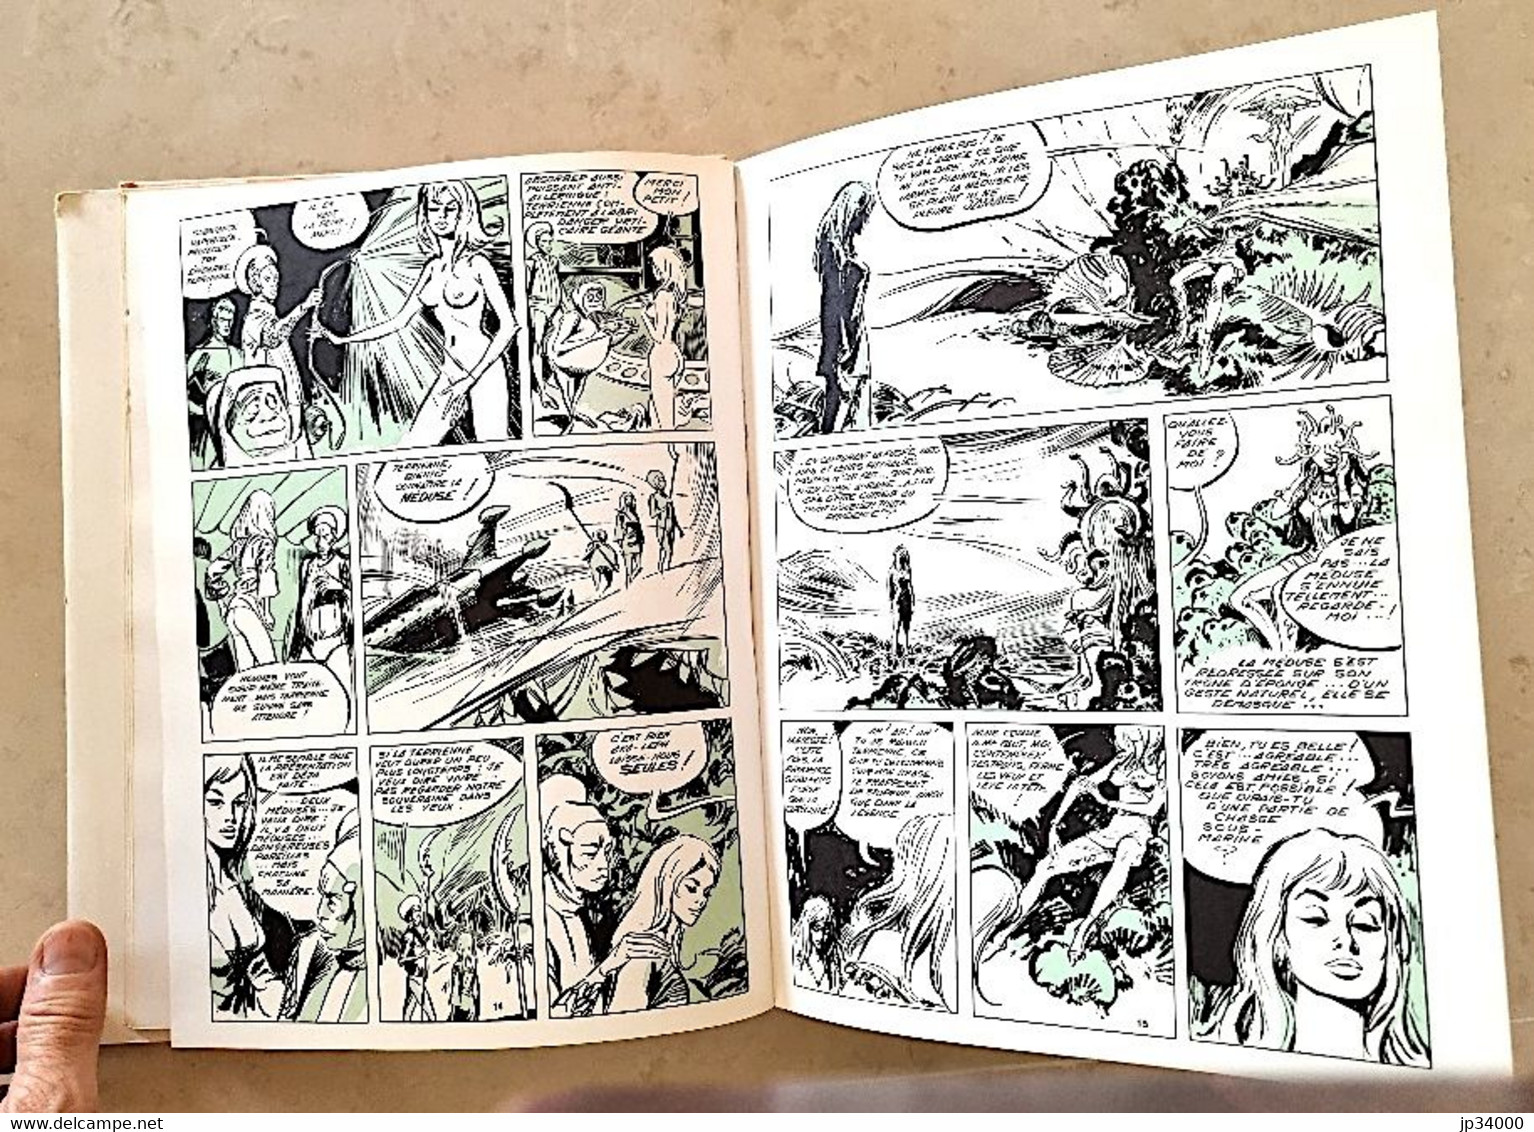 BARBARELLA de Jean Claude Forest. Edition originale (terrain vague 1964)